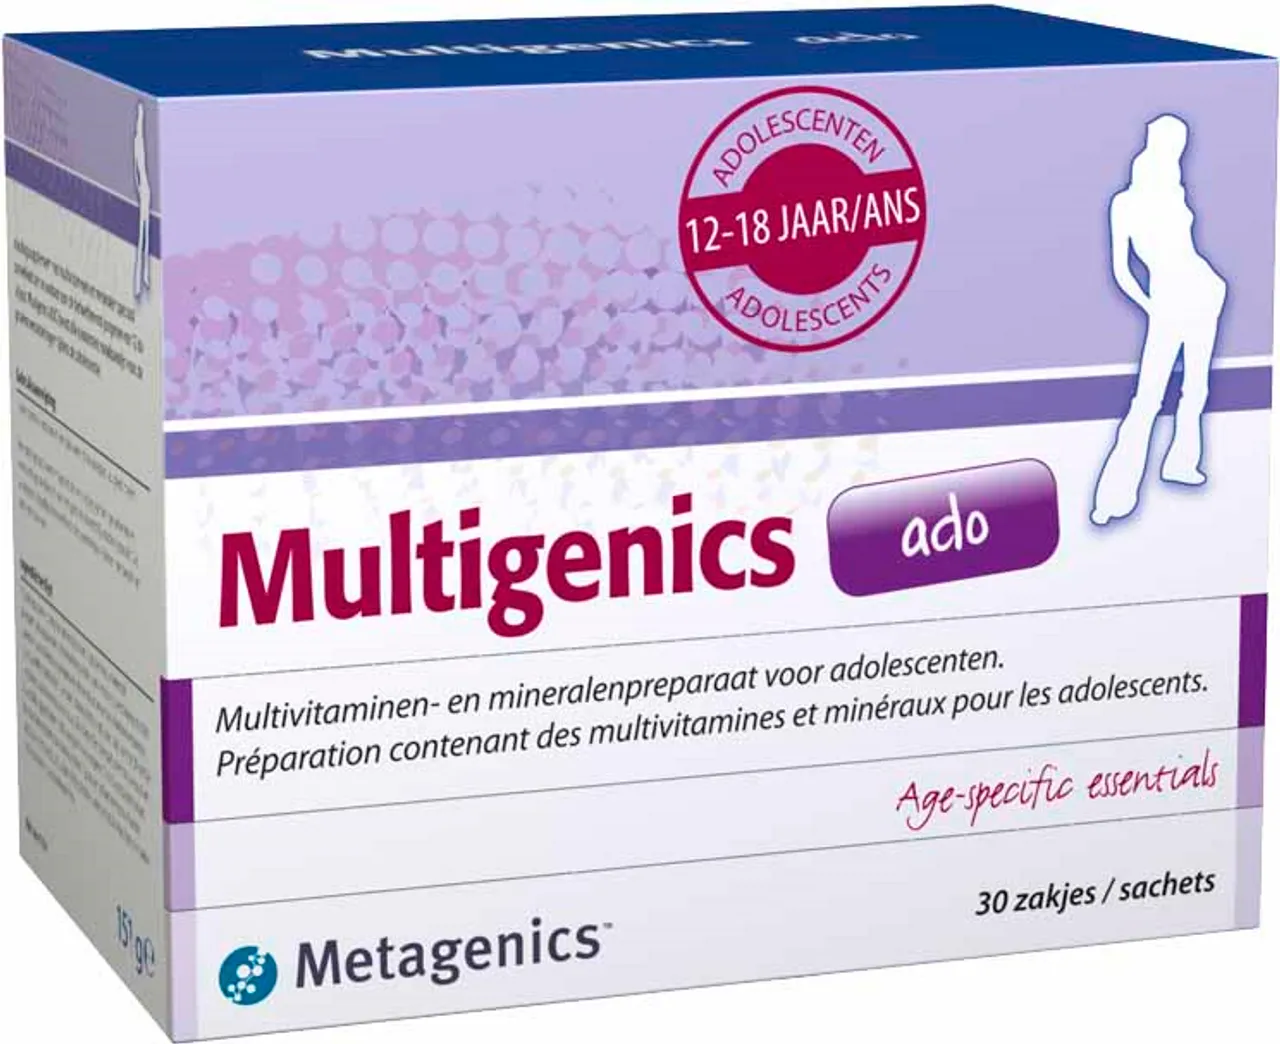 Metagenics Multigenics Ado Zakjes